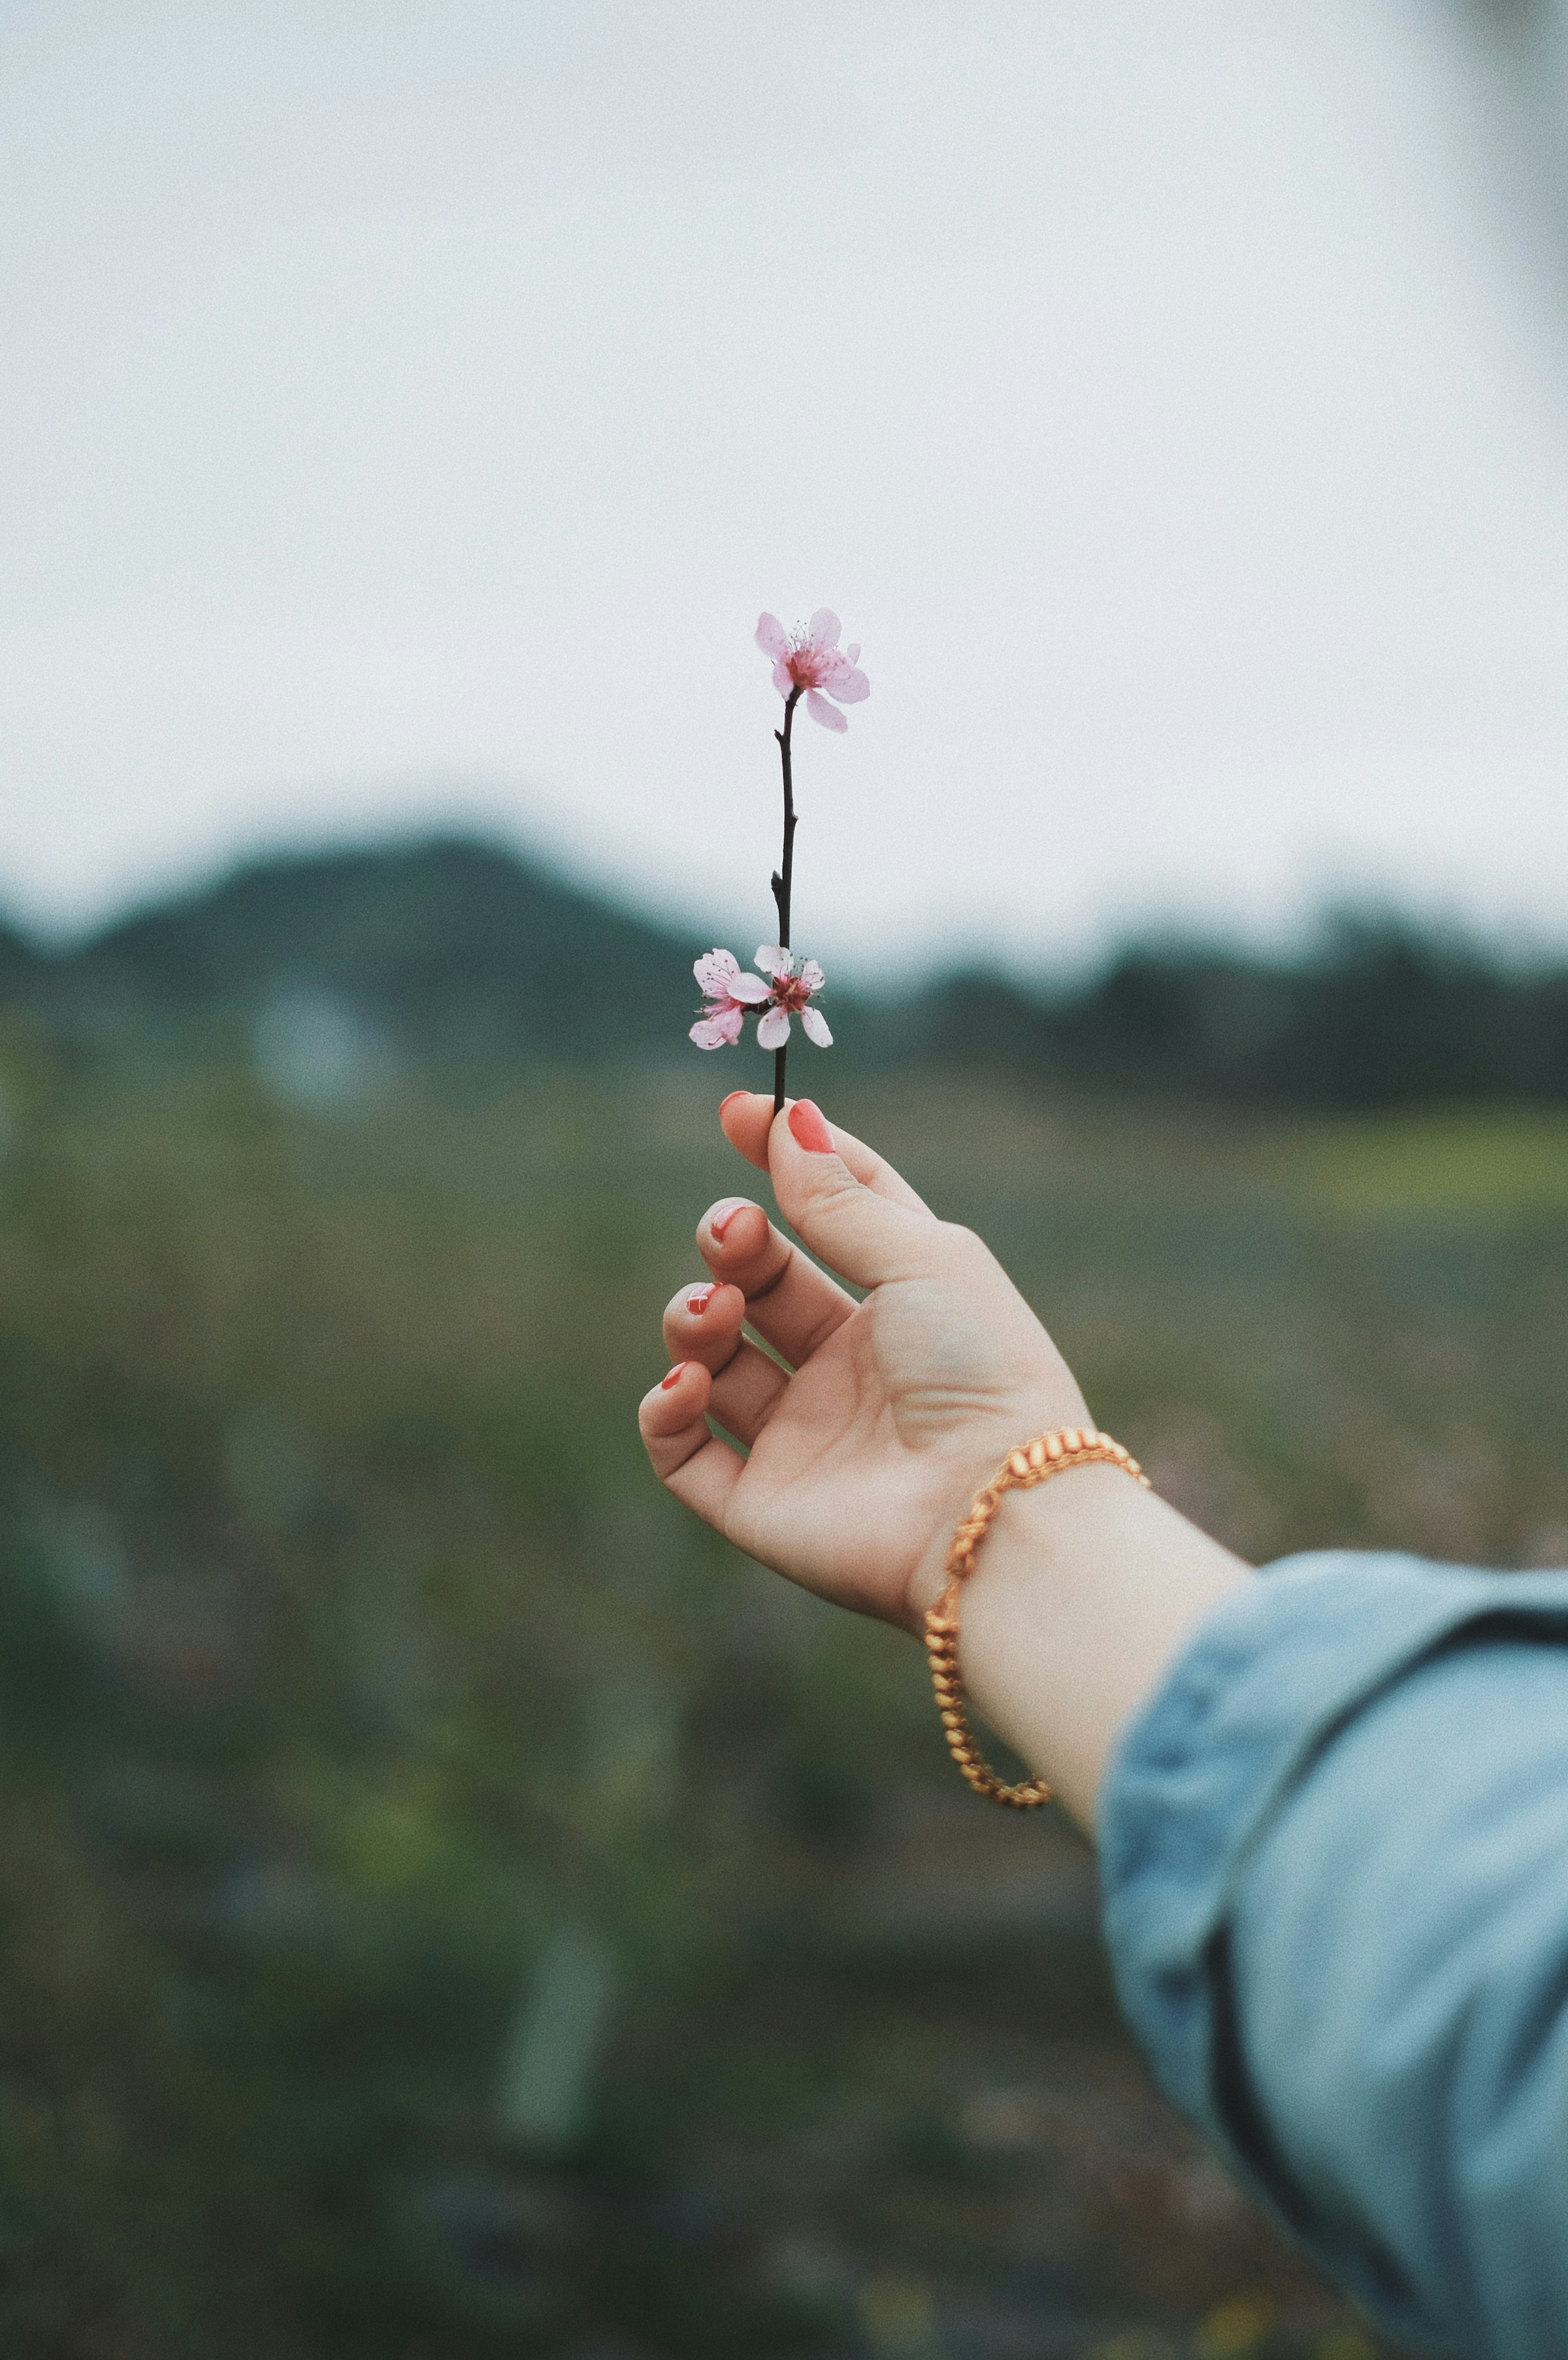 A person wearing a bracelet holding a flower | Source: Unsplash